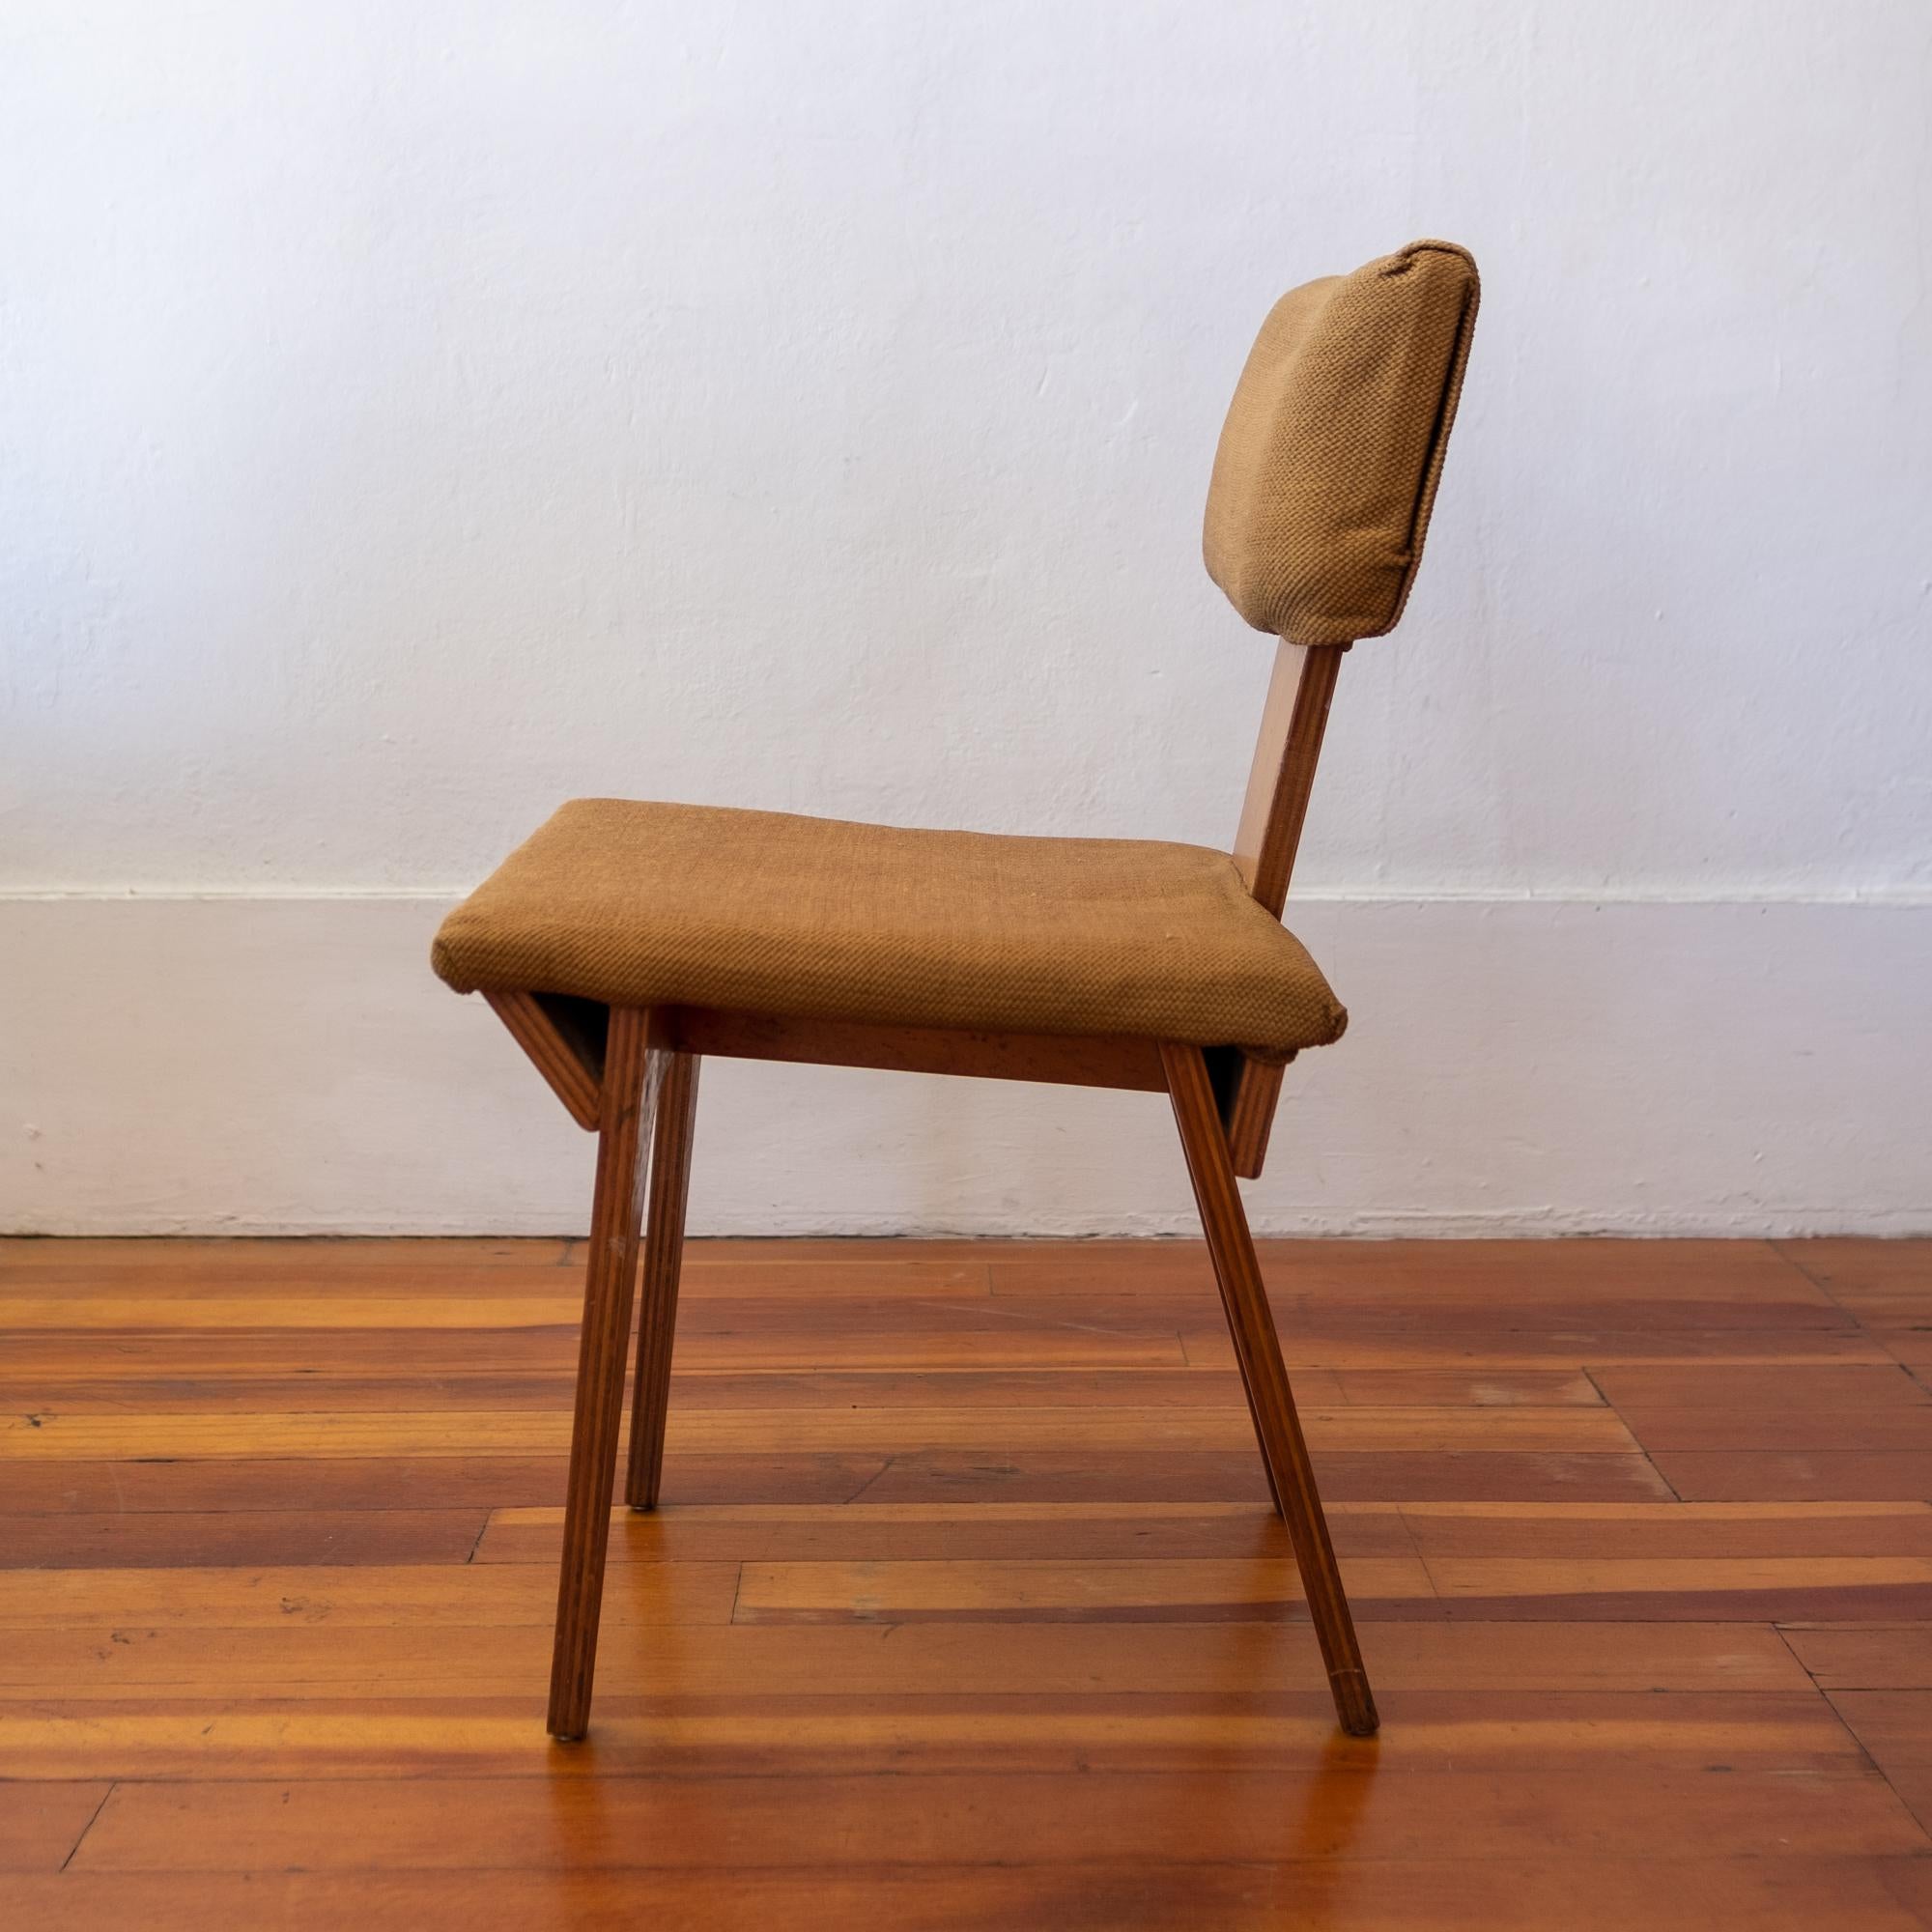 American Nathan Lerner New Bauhaus Chair, 1940s